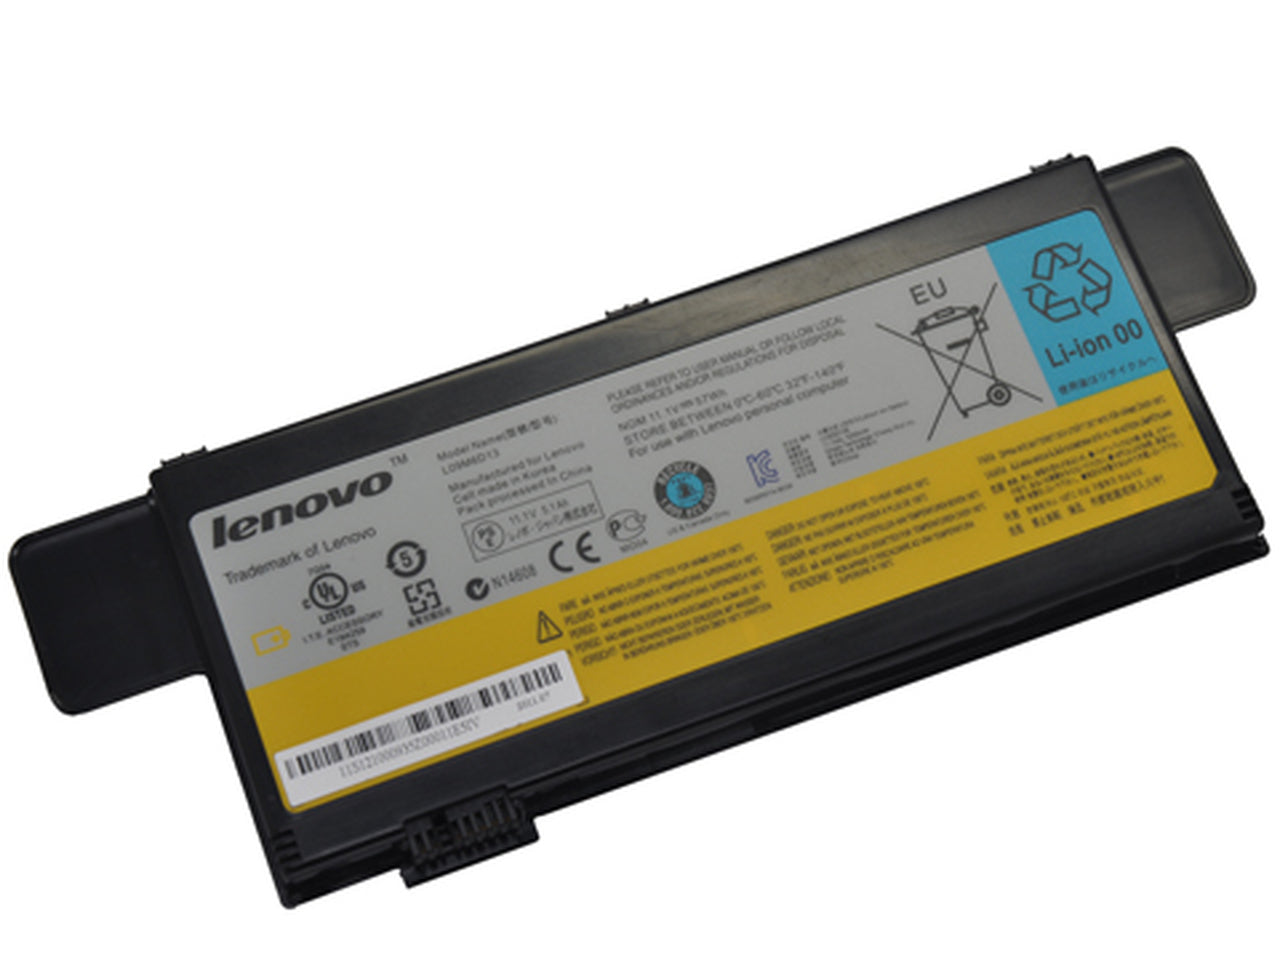 Original Lenovo ThinkPad U150 Laptop Battery L09M3P13 57Y6354 L09O6D13